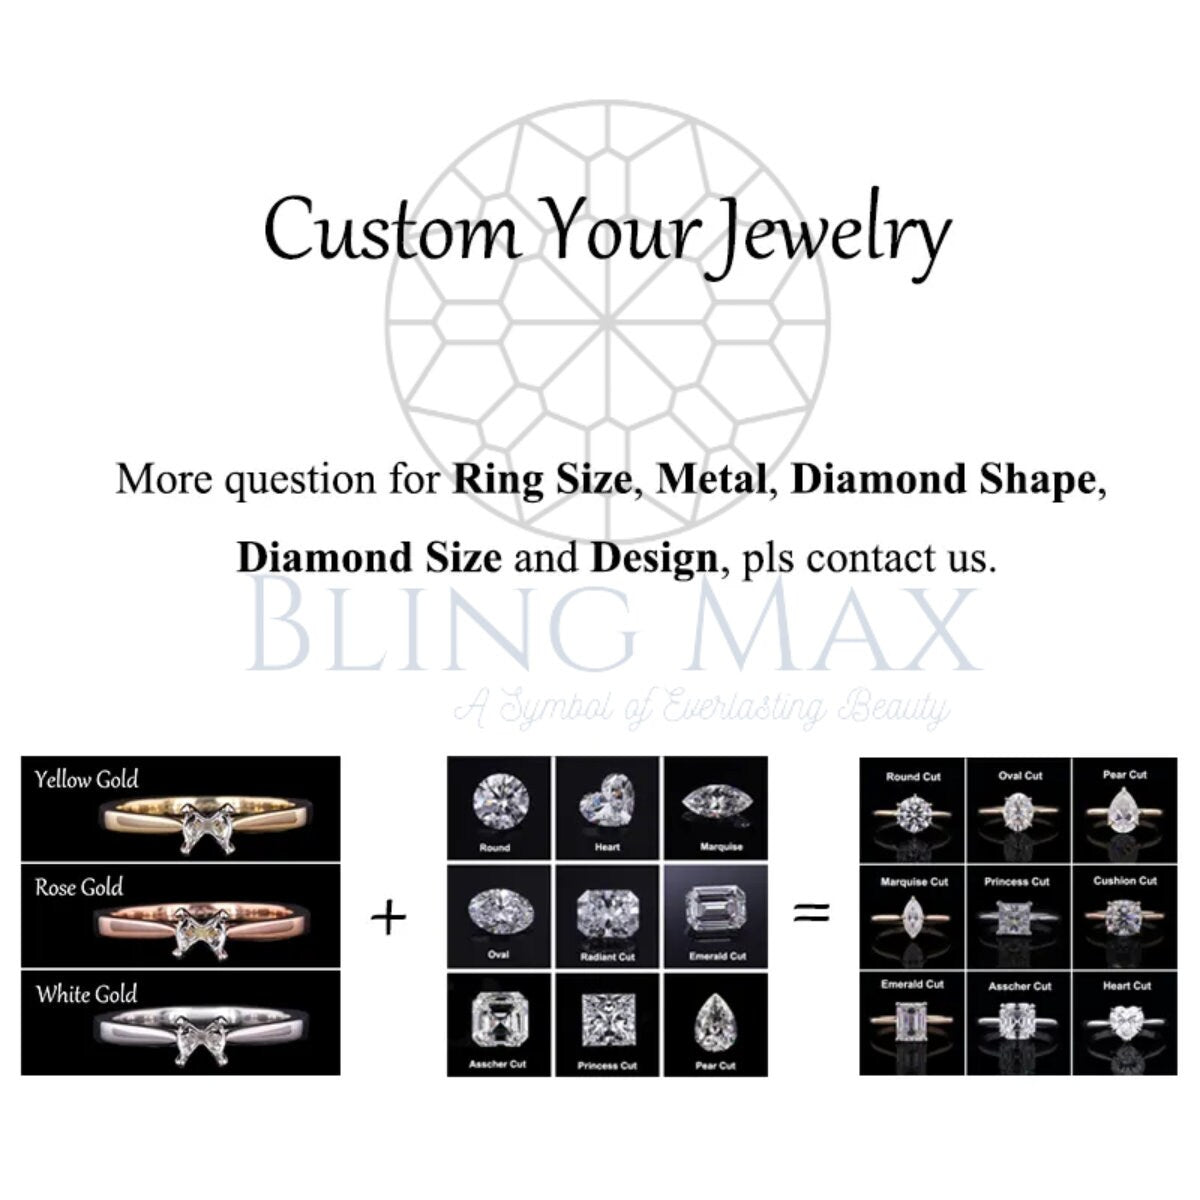 2.75 Carat VS | E Color Oval Lab Grown Diamond Solitaire Engagement Ring